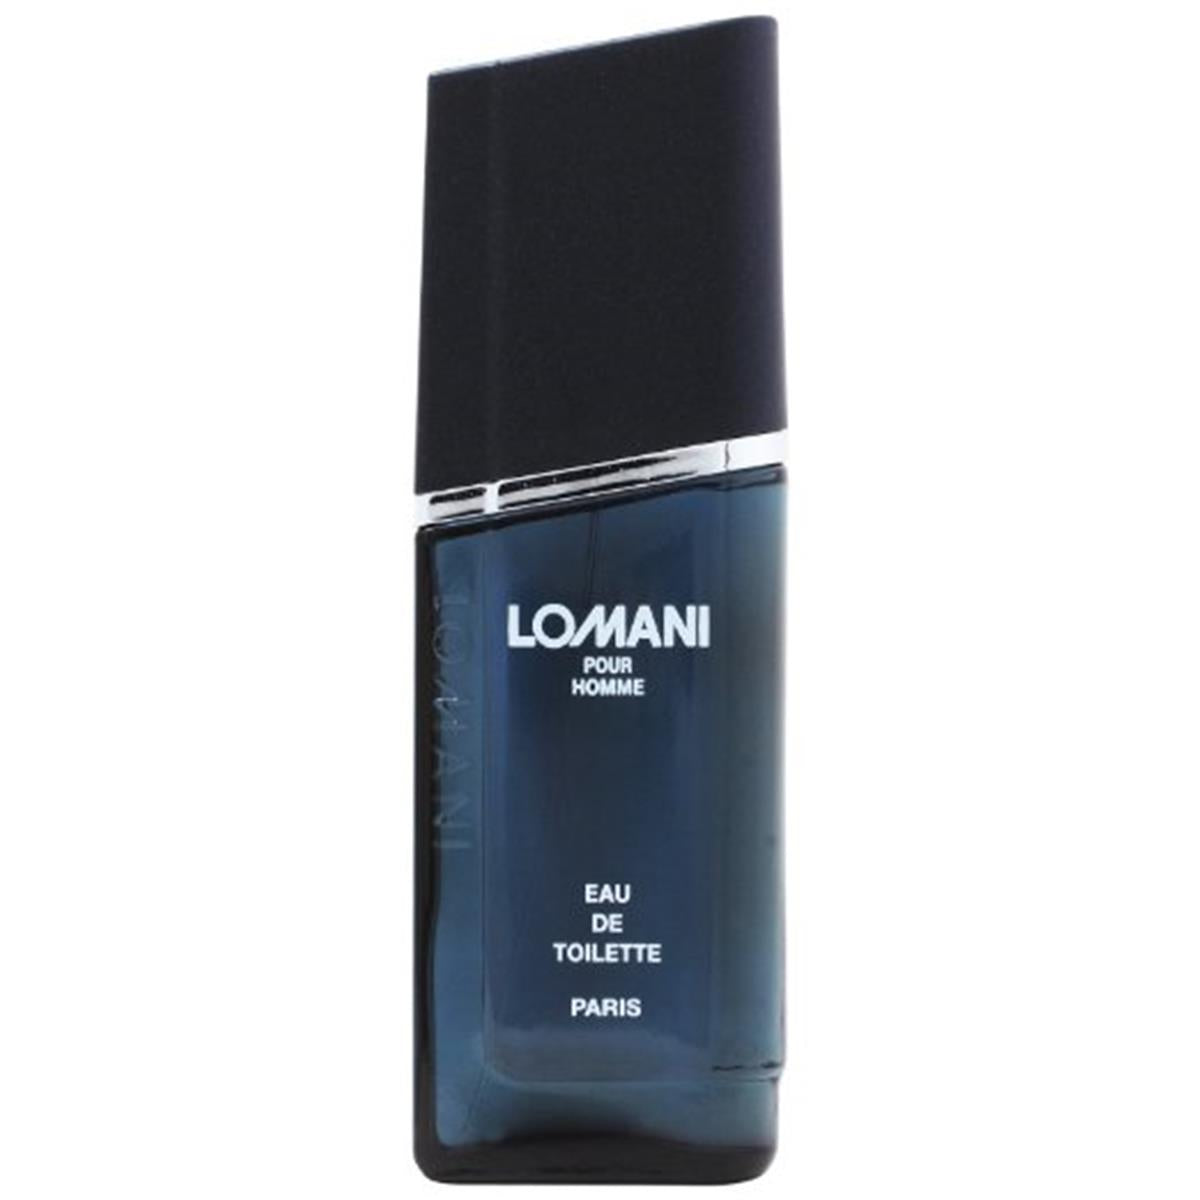 Perfume Worldwide Perfume World Wide LOMANI-ORG-3.3M Eau De Toilette Spray For Men - 3.3 oz. One Size male